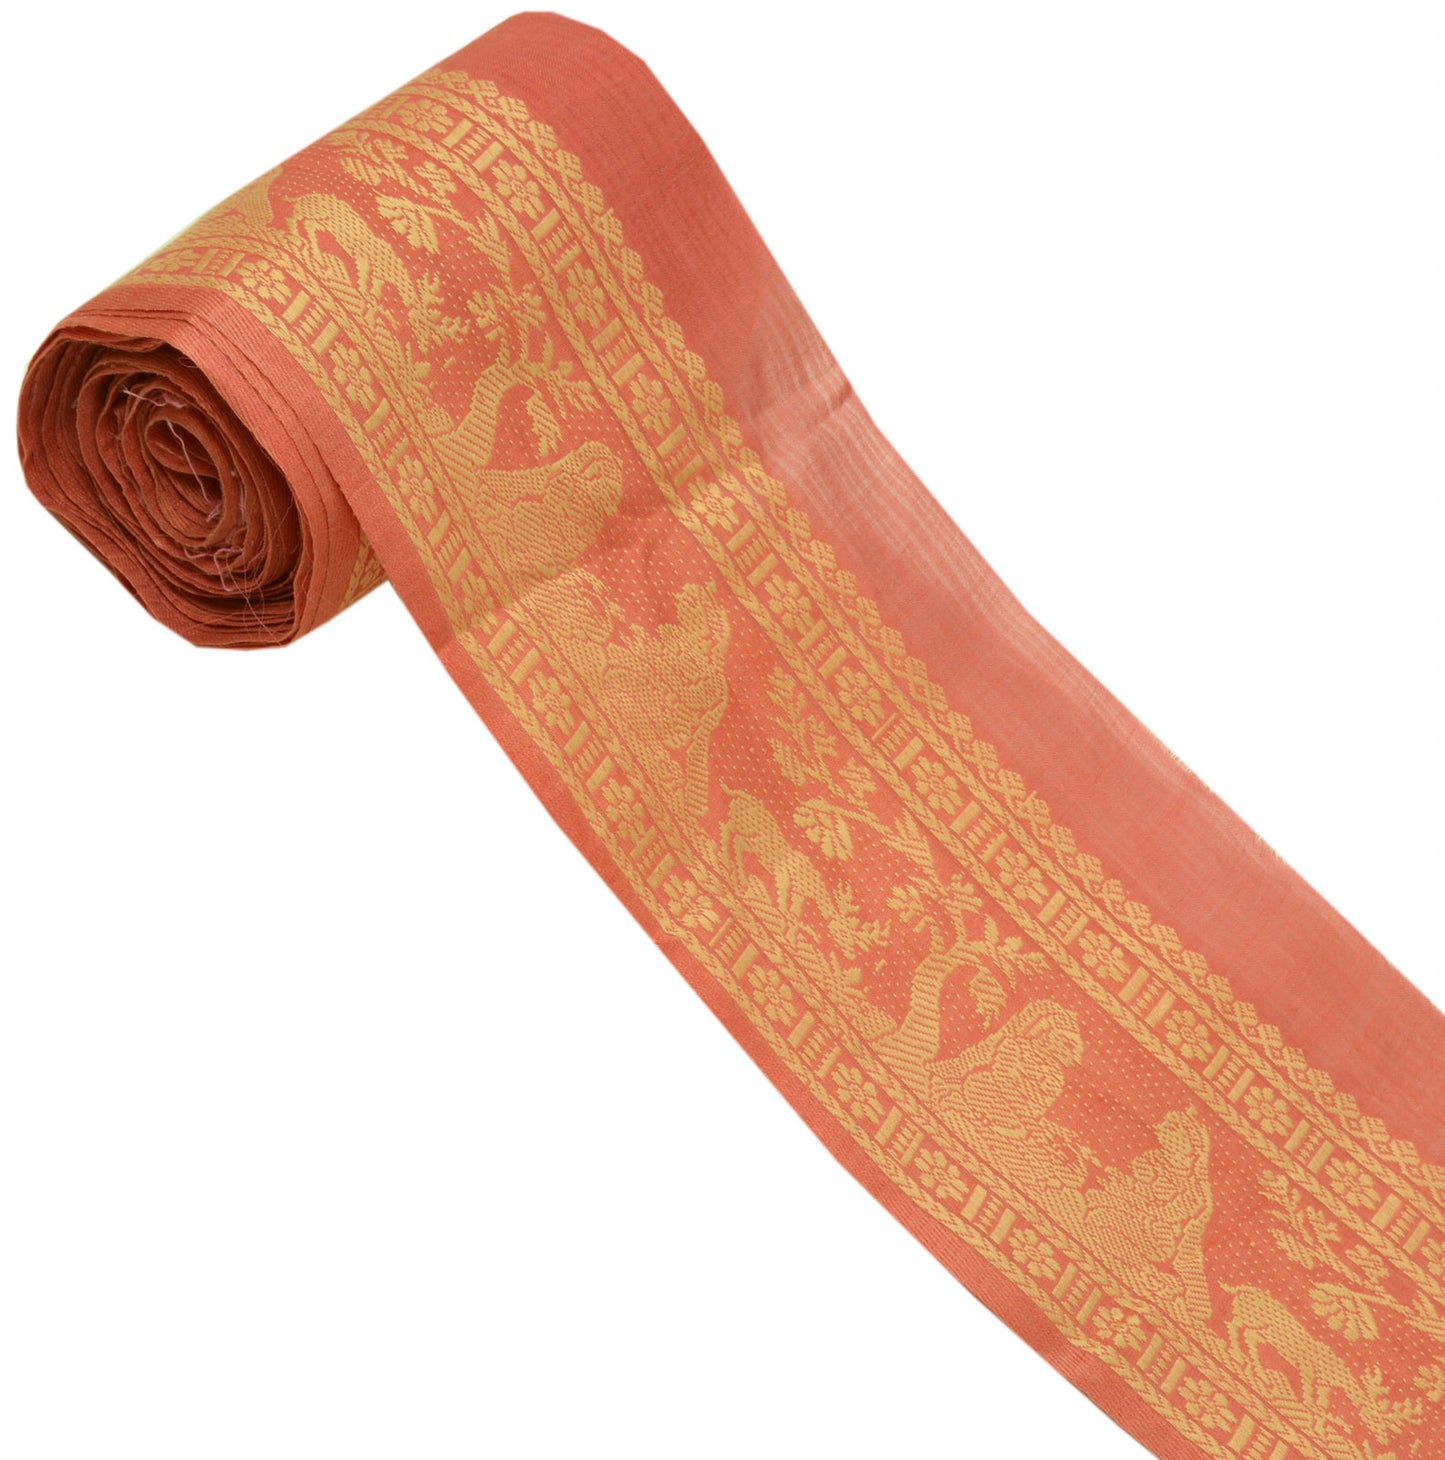 Sushila Vintage Peach Saree Border Craft Sewing Trim Human Woven Lace Ribbon